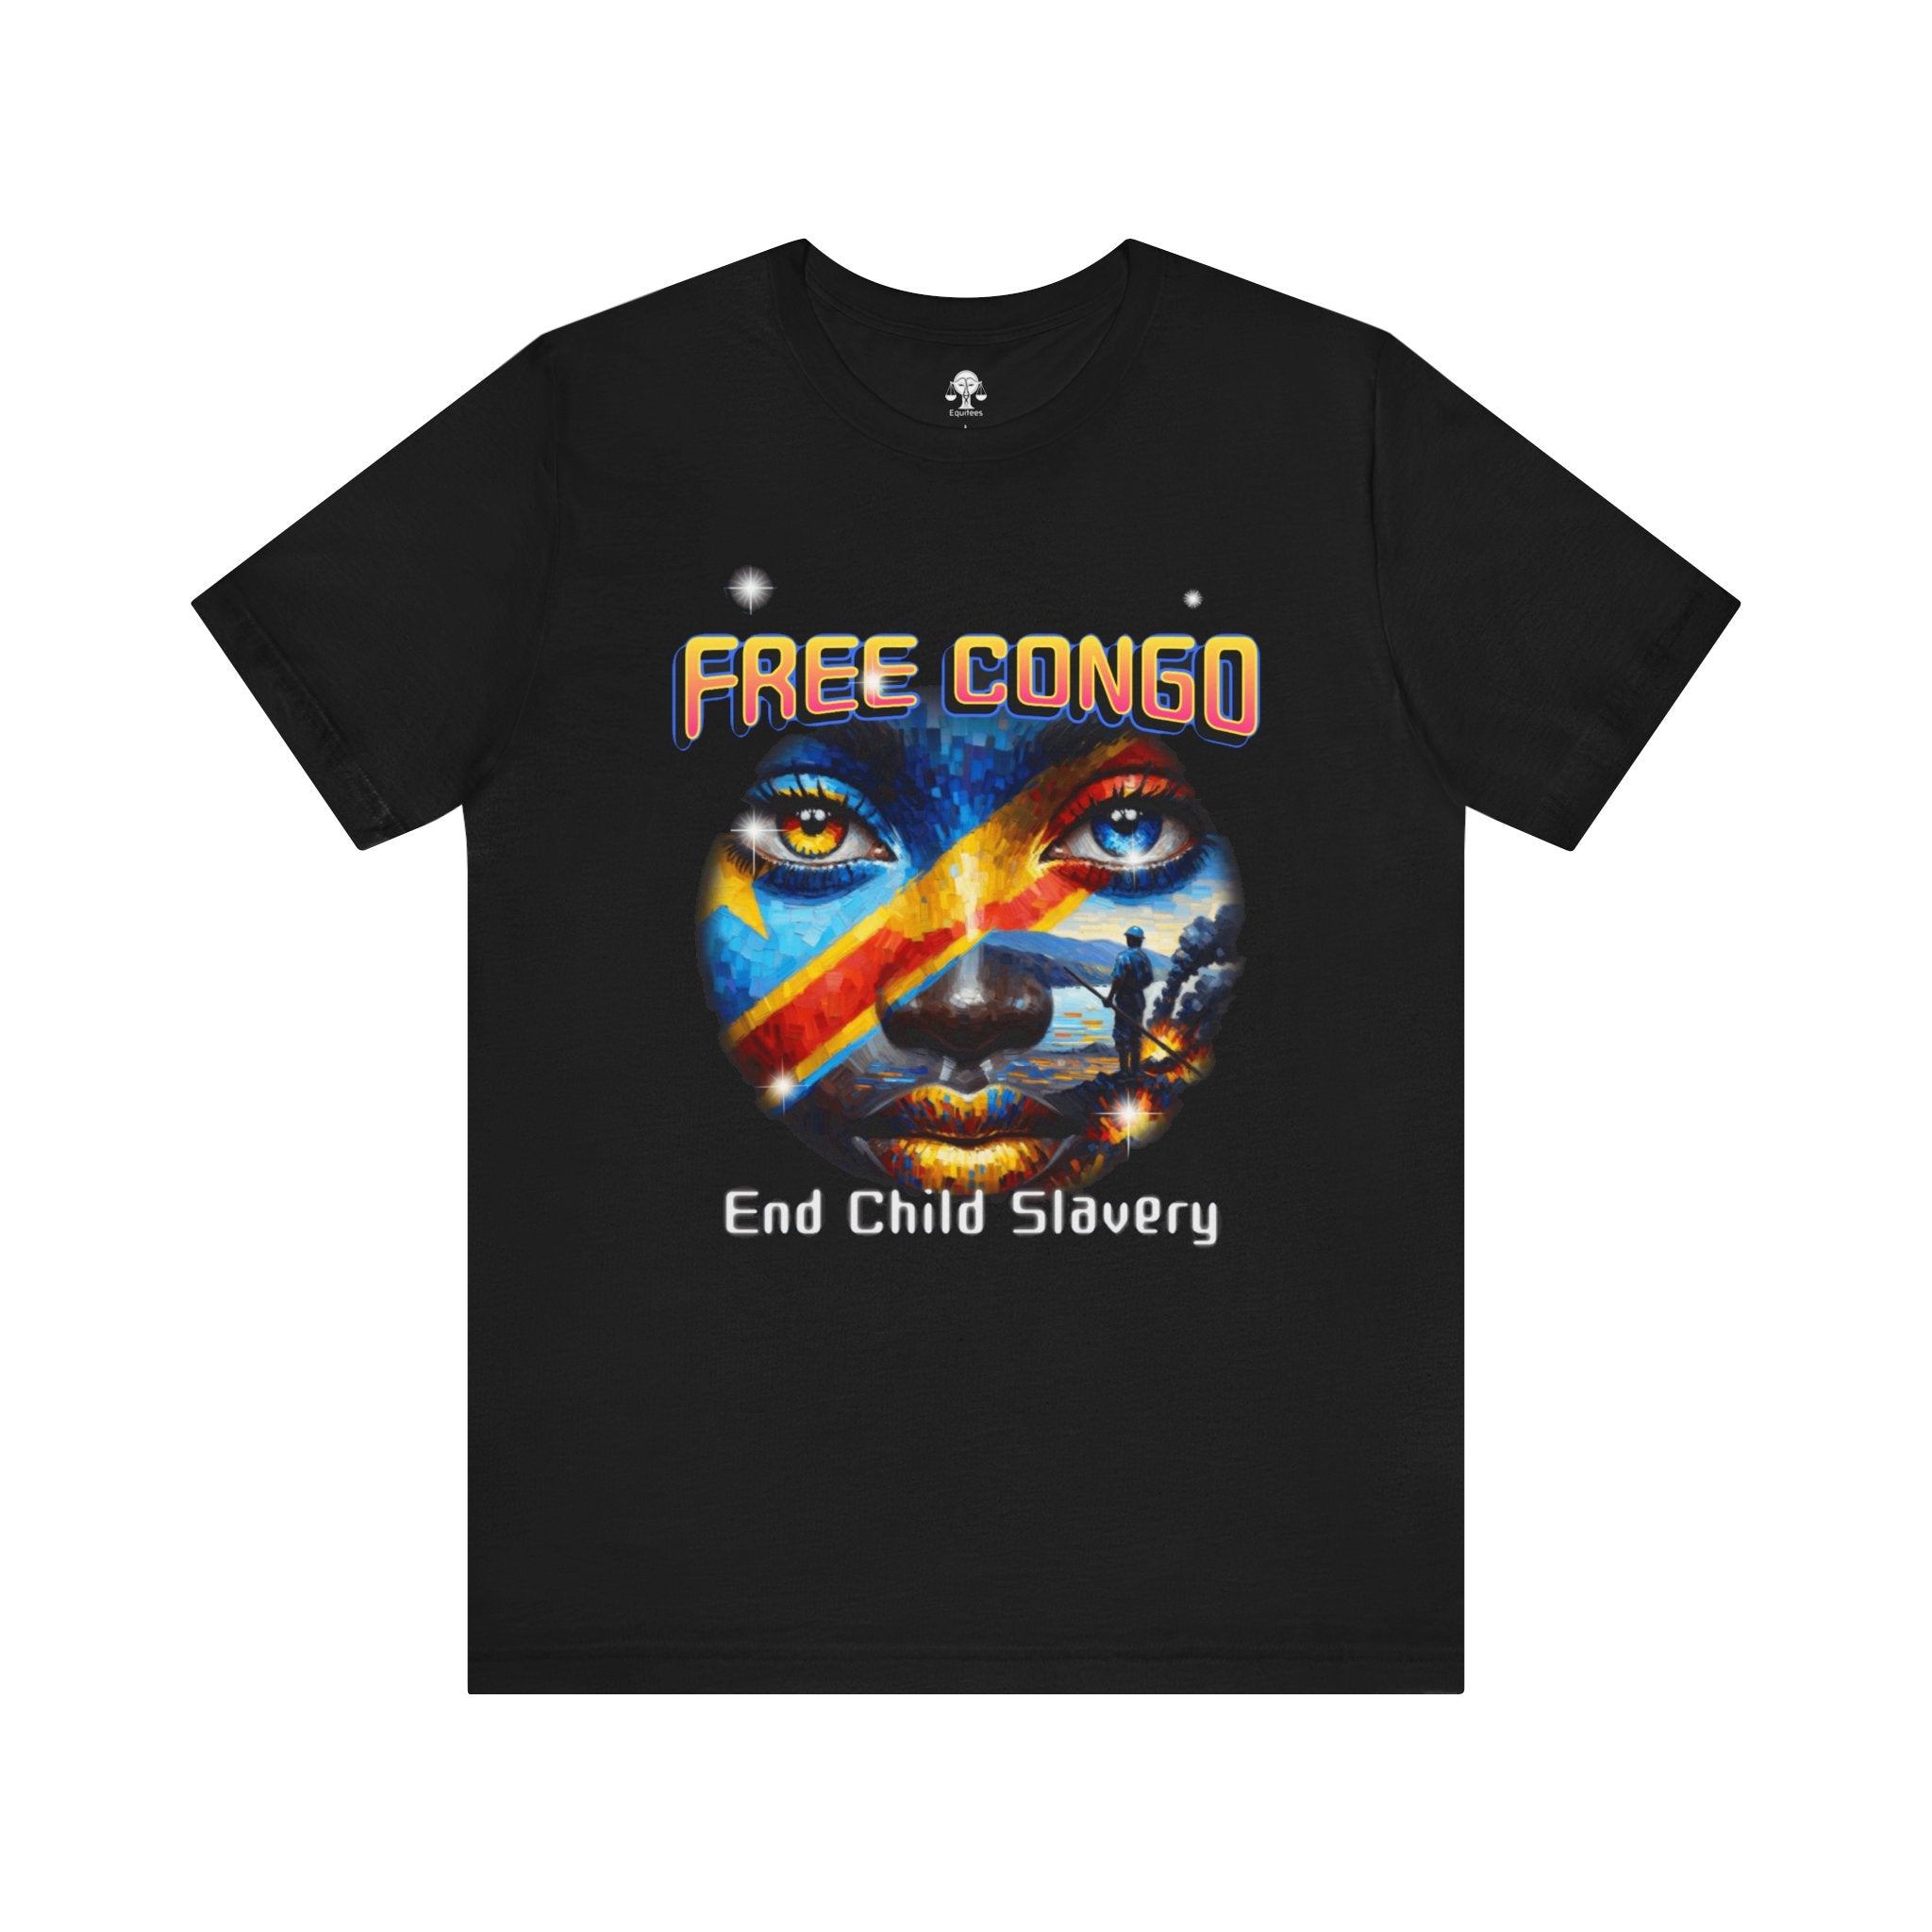 Free Congo Tee Shirt